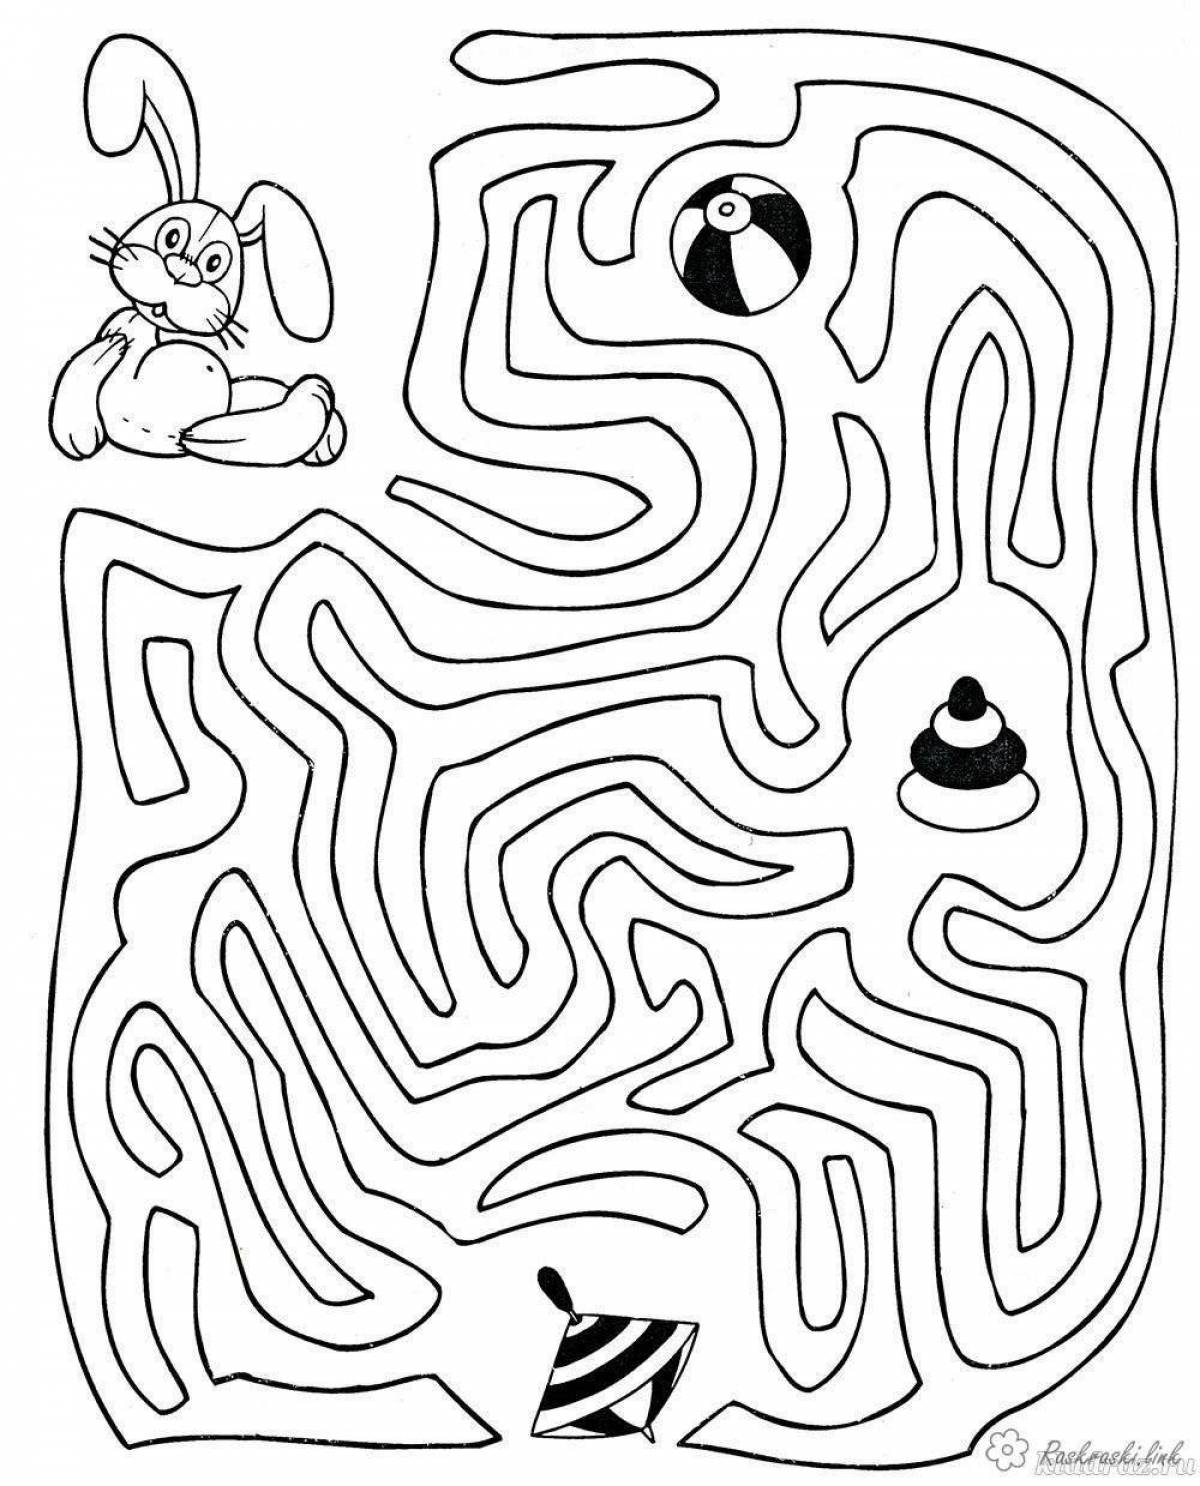 Fabulous maze coloring page